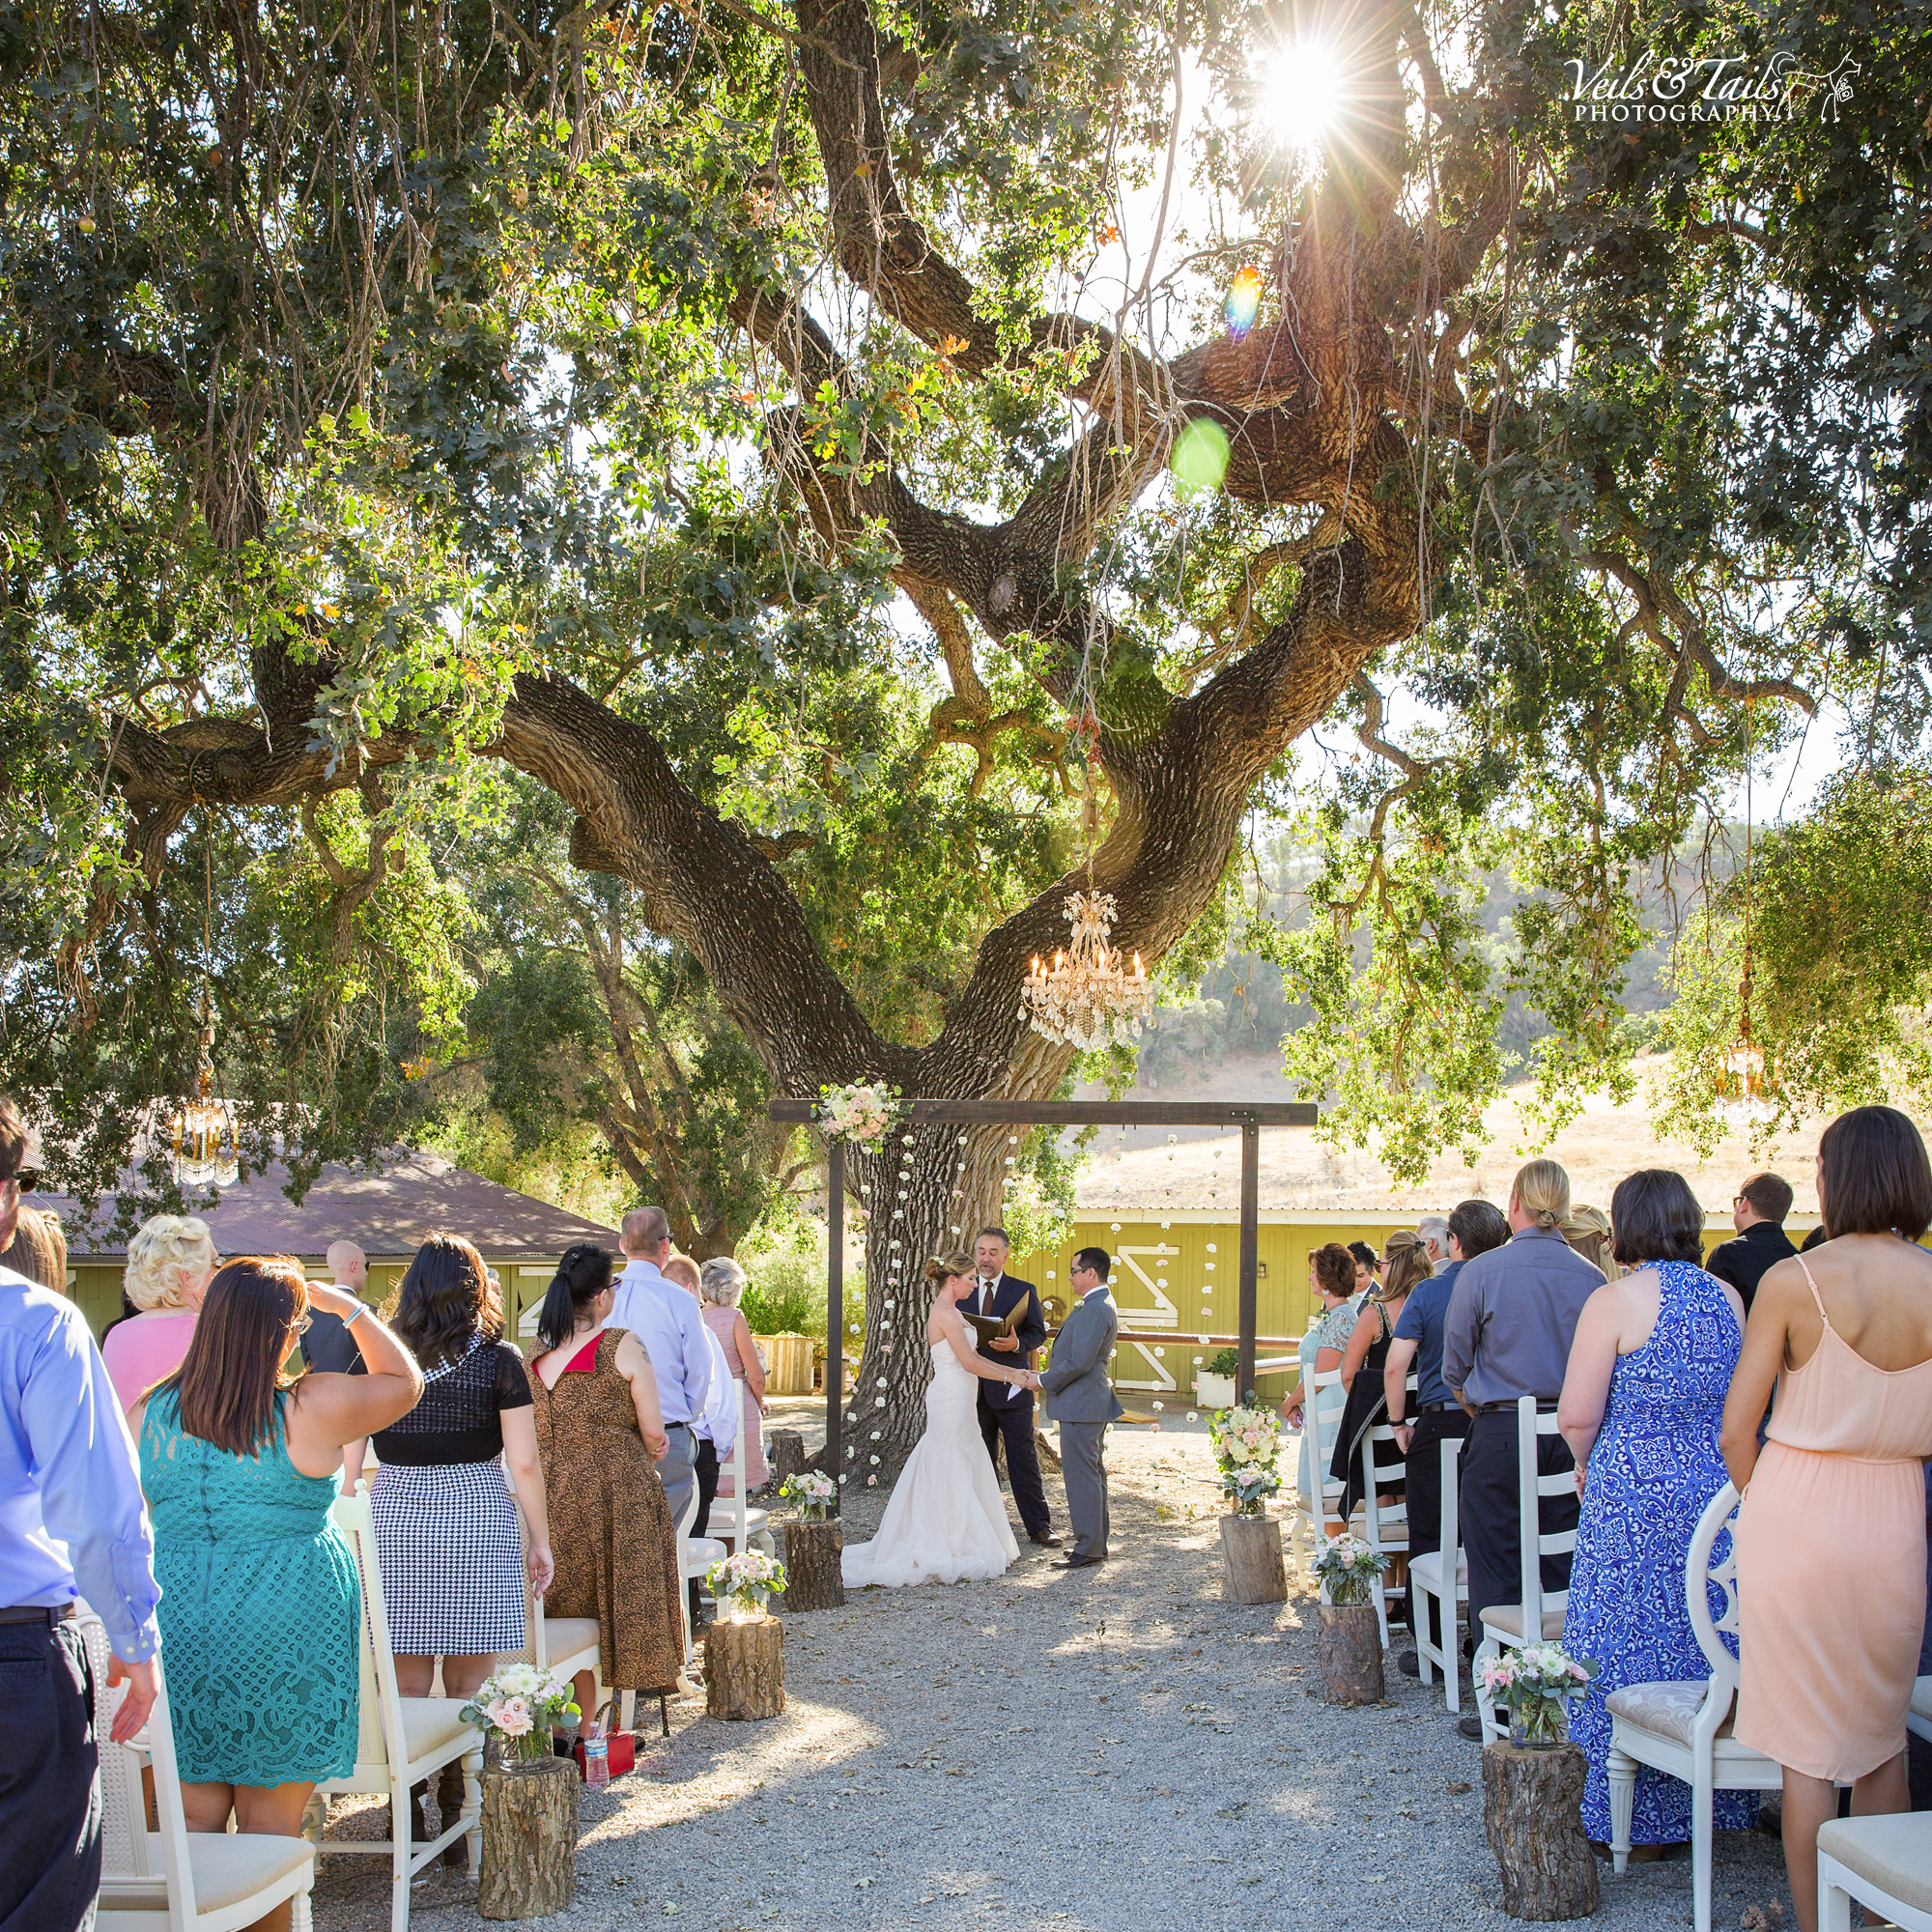 average cost of wedding photographer in california